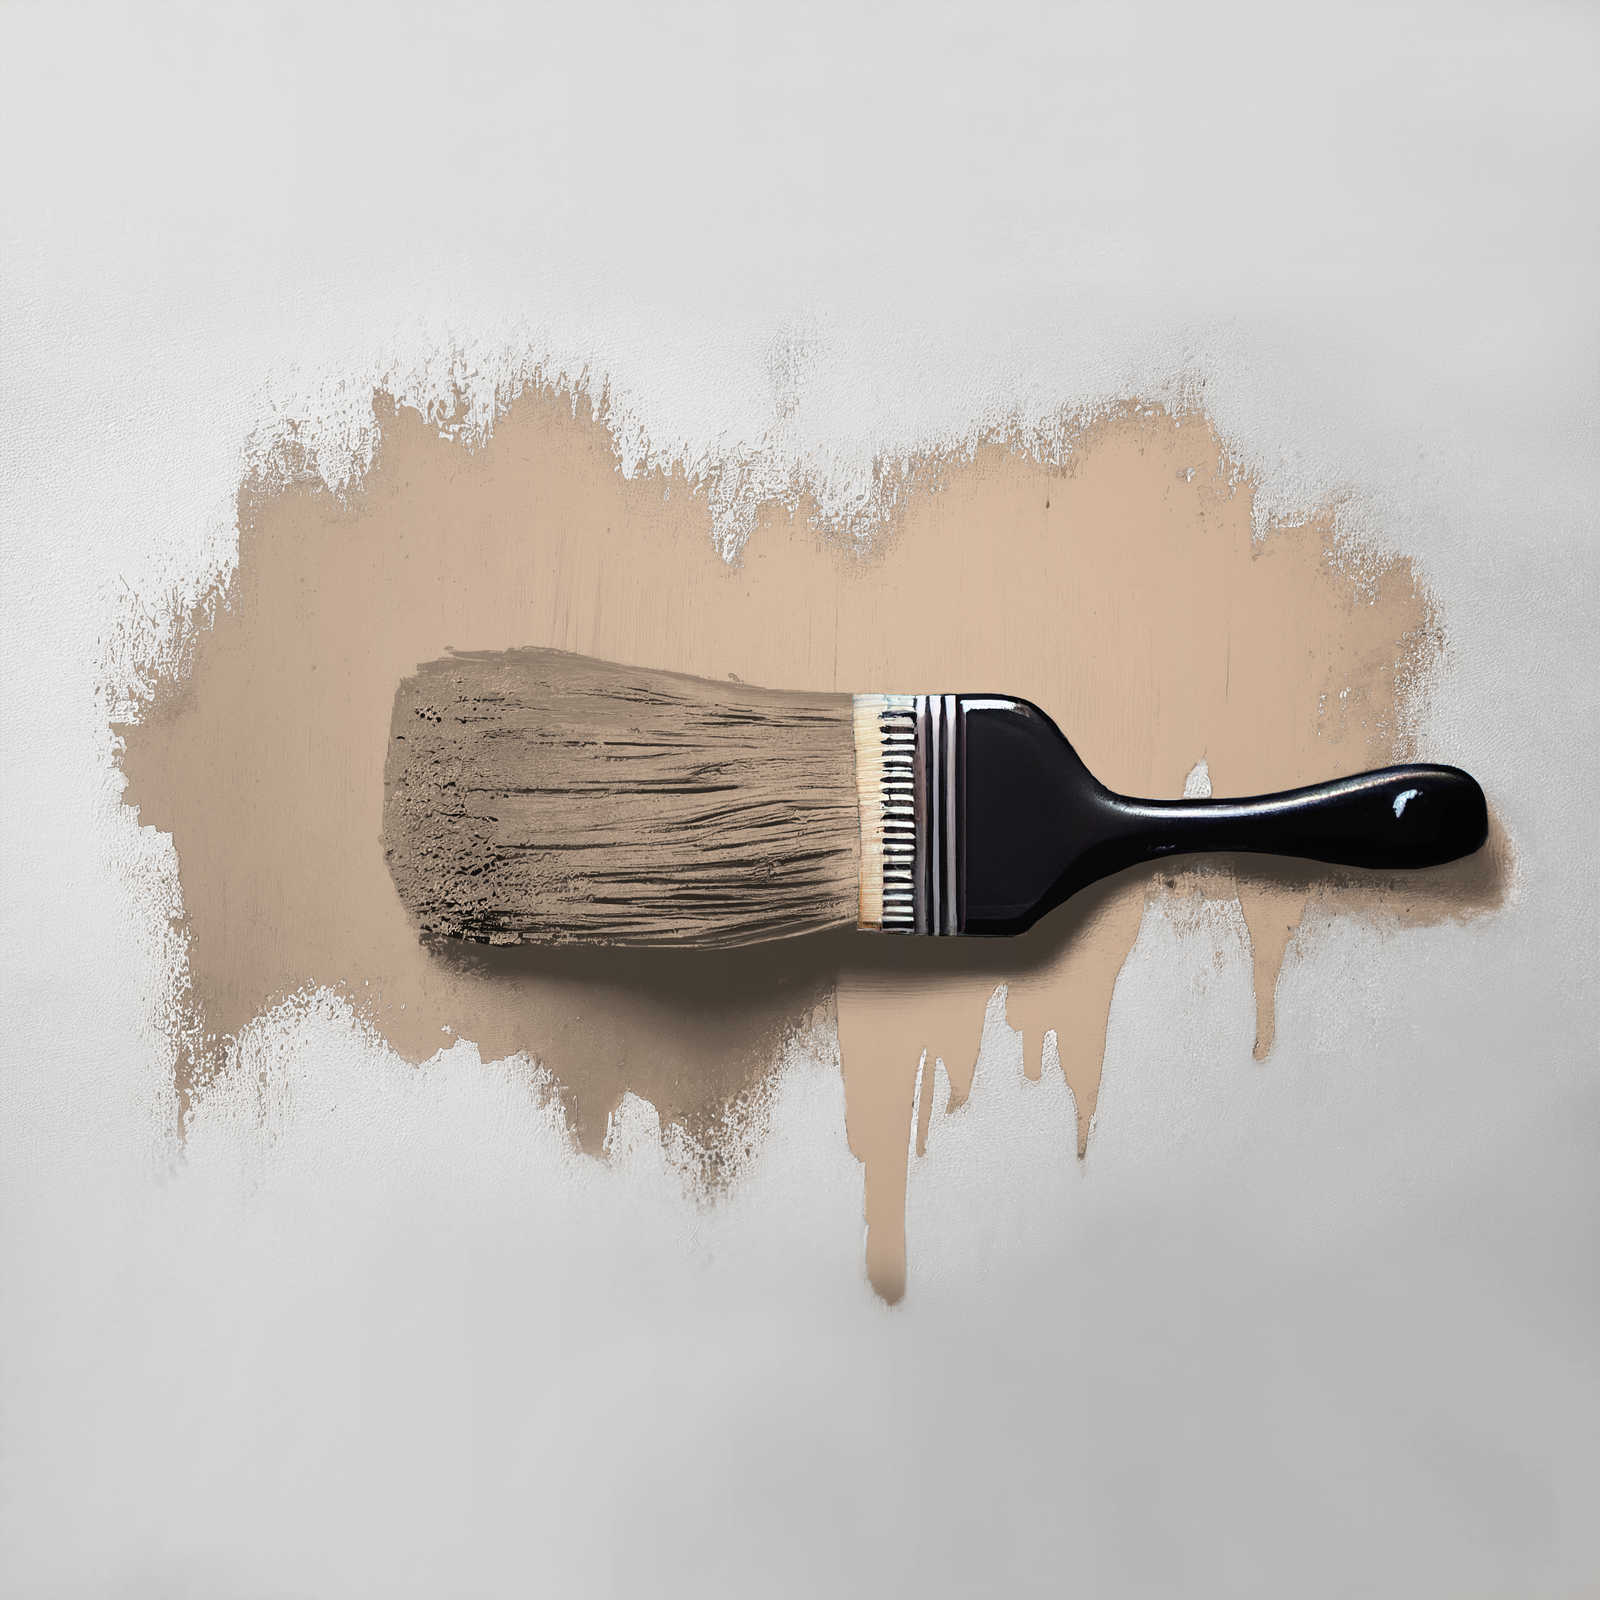             Wall Paint TCK6010 »Latte Macchhiato« in natural beige – 5.0 litre
        